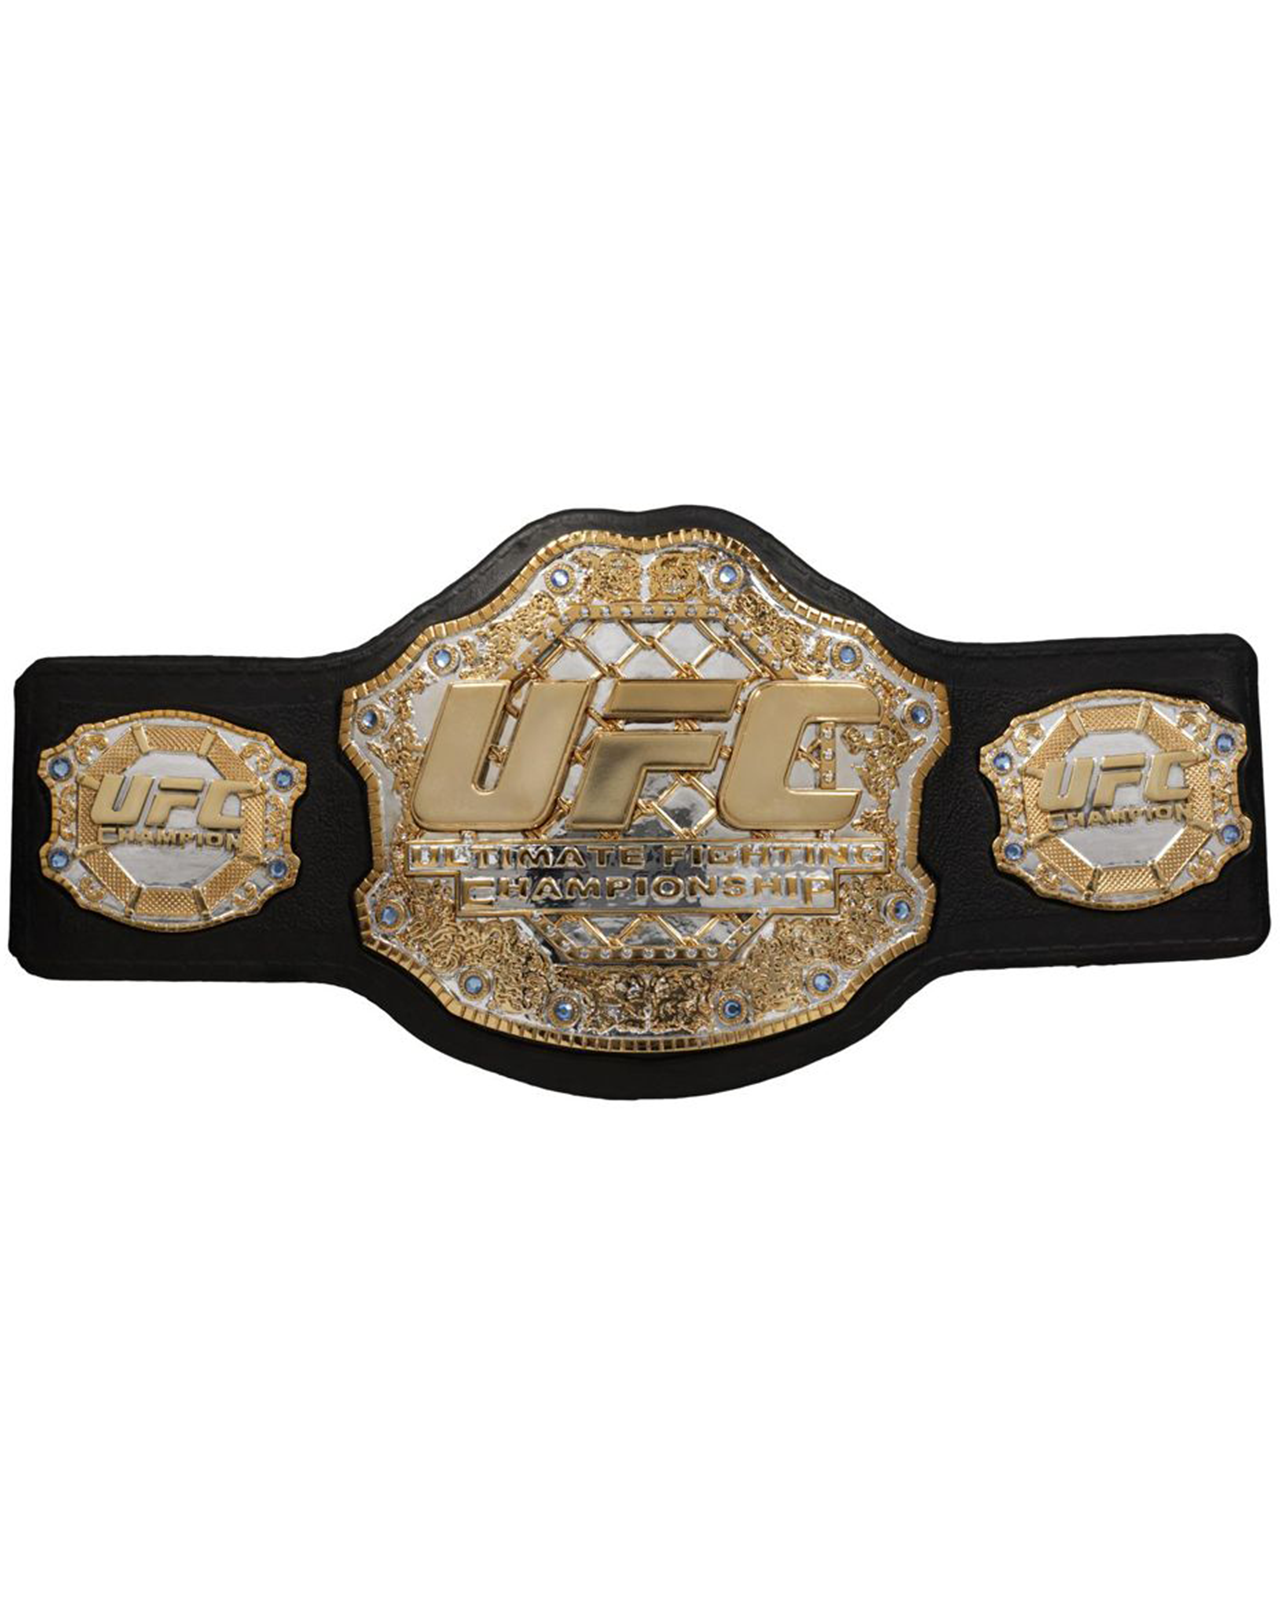 Ufc Ultimate Fighting Championship Wrestling Belt Replica Replica Adult size 